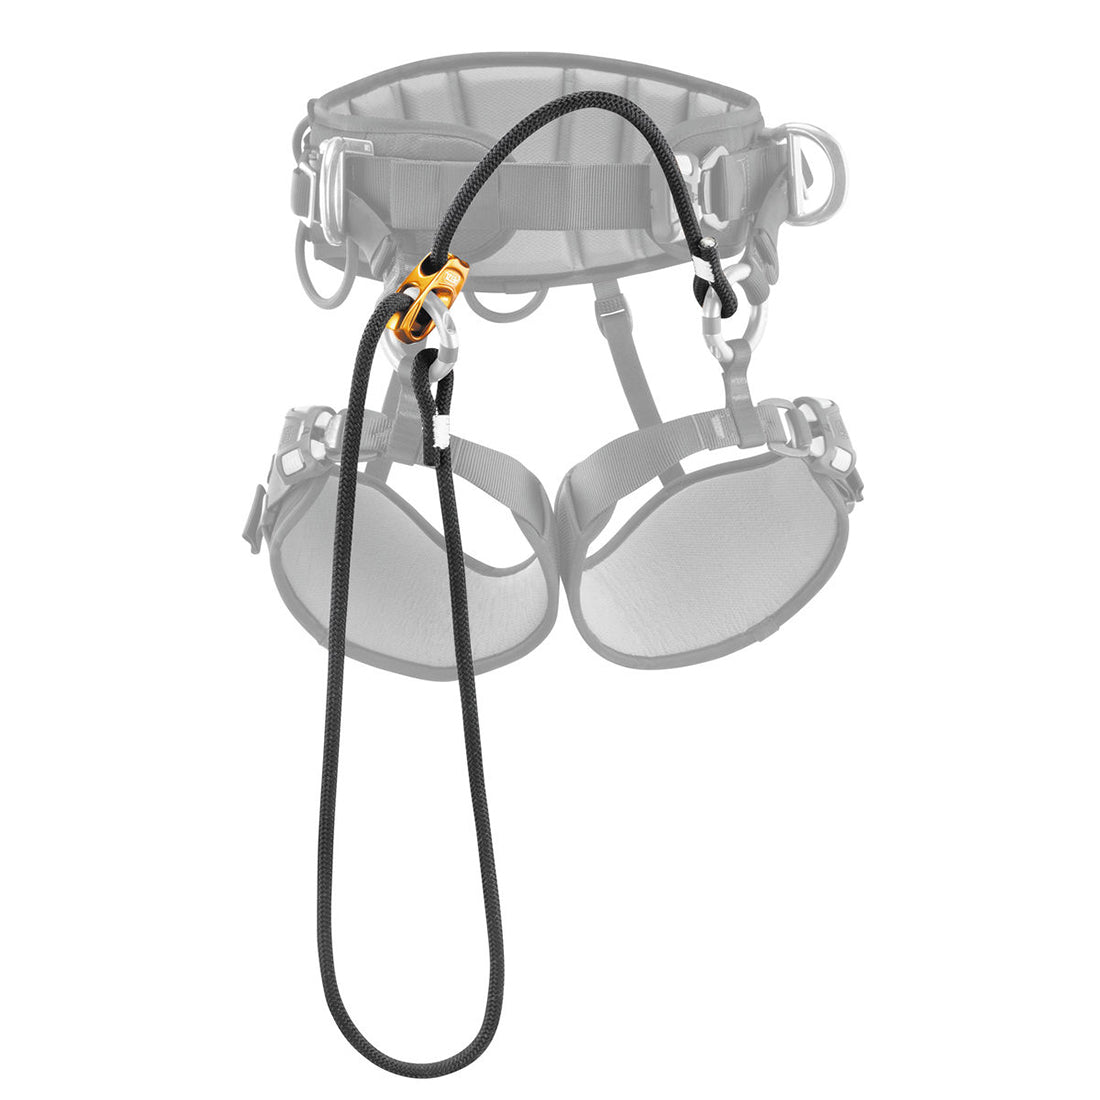 Petzl Adjustable attachment bridge for SEQUOIA and SEQUOIA SRT harness